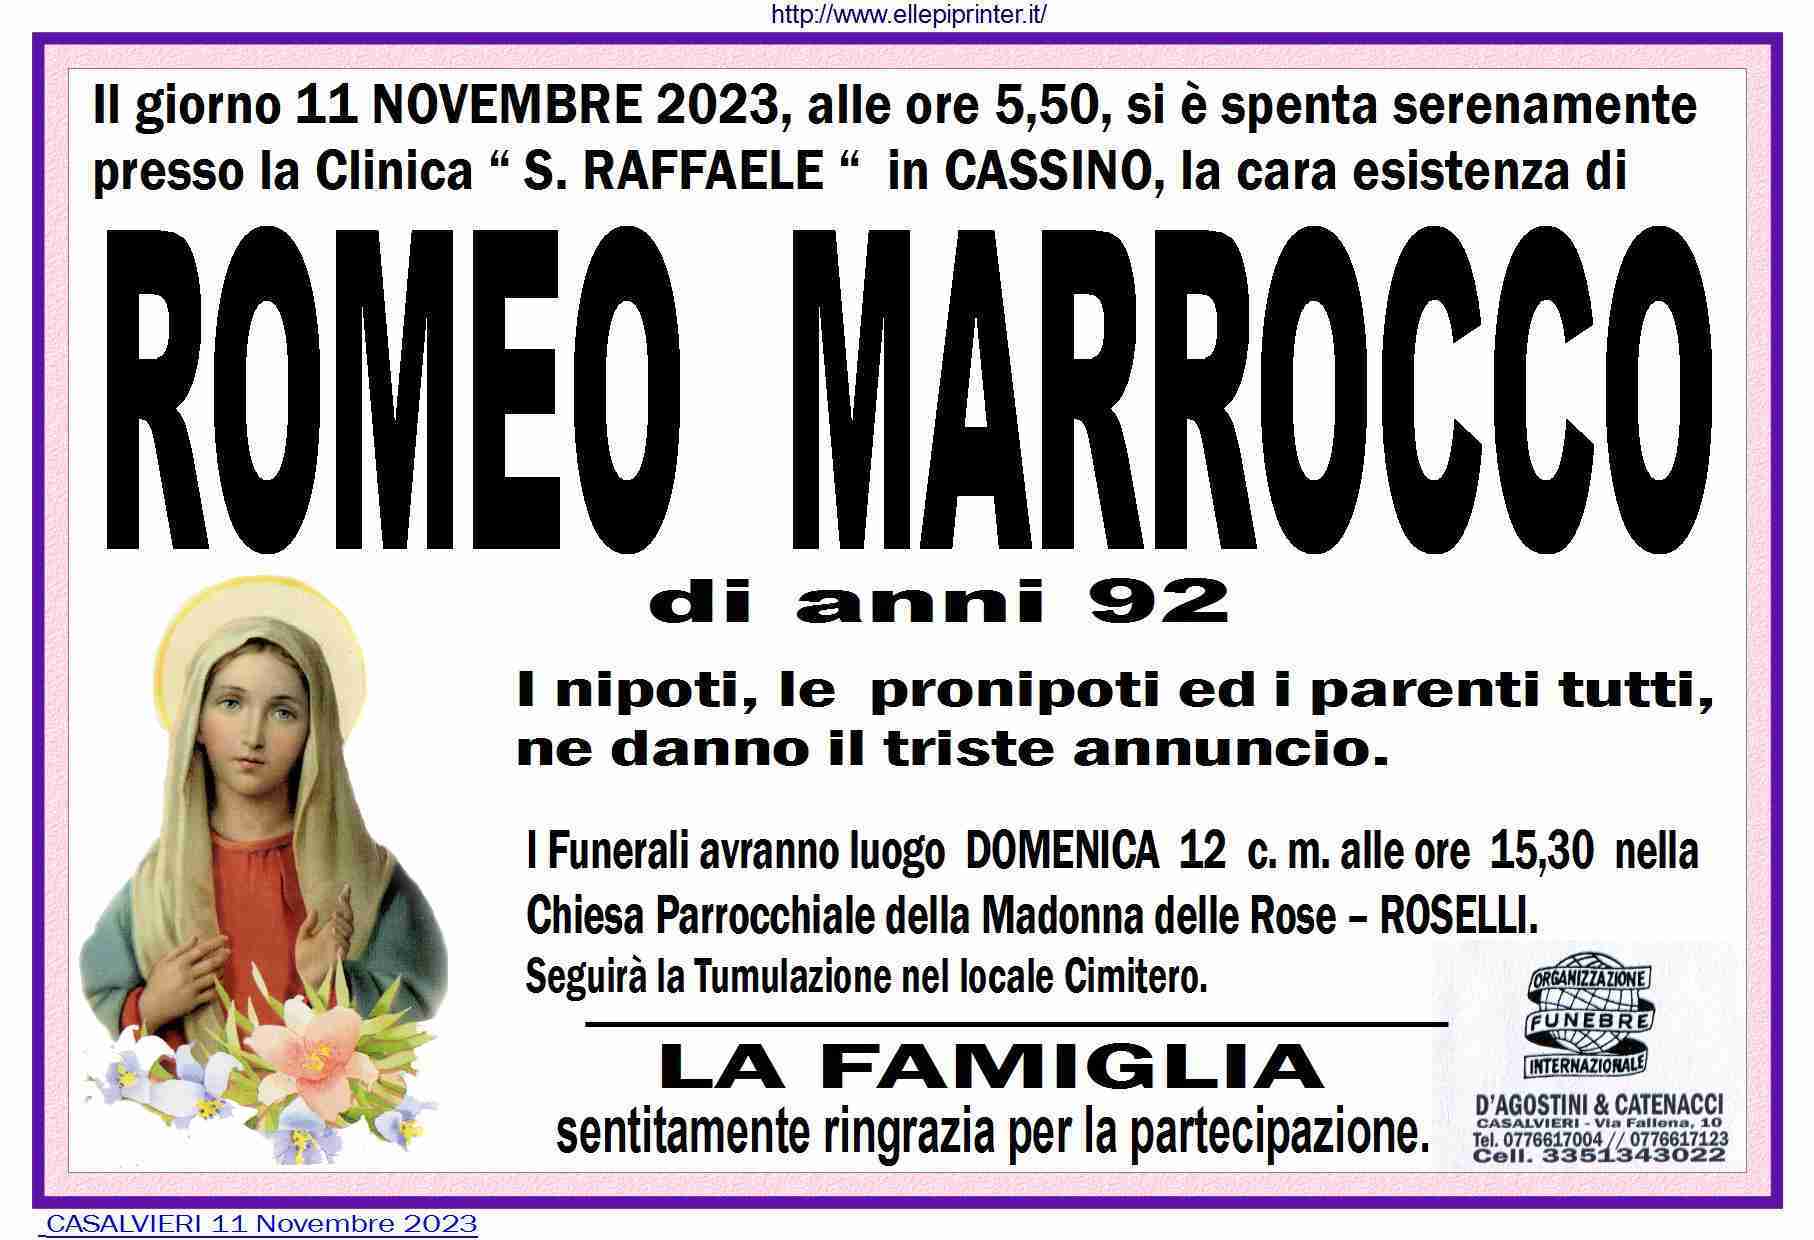 Romeo Marrocco